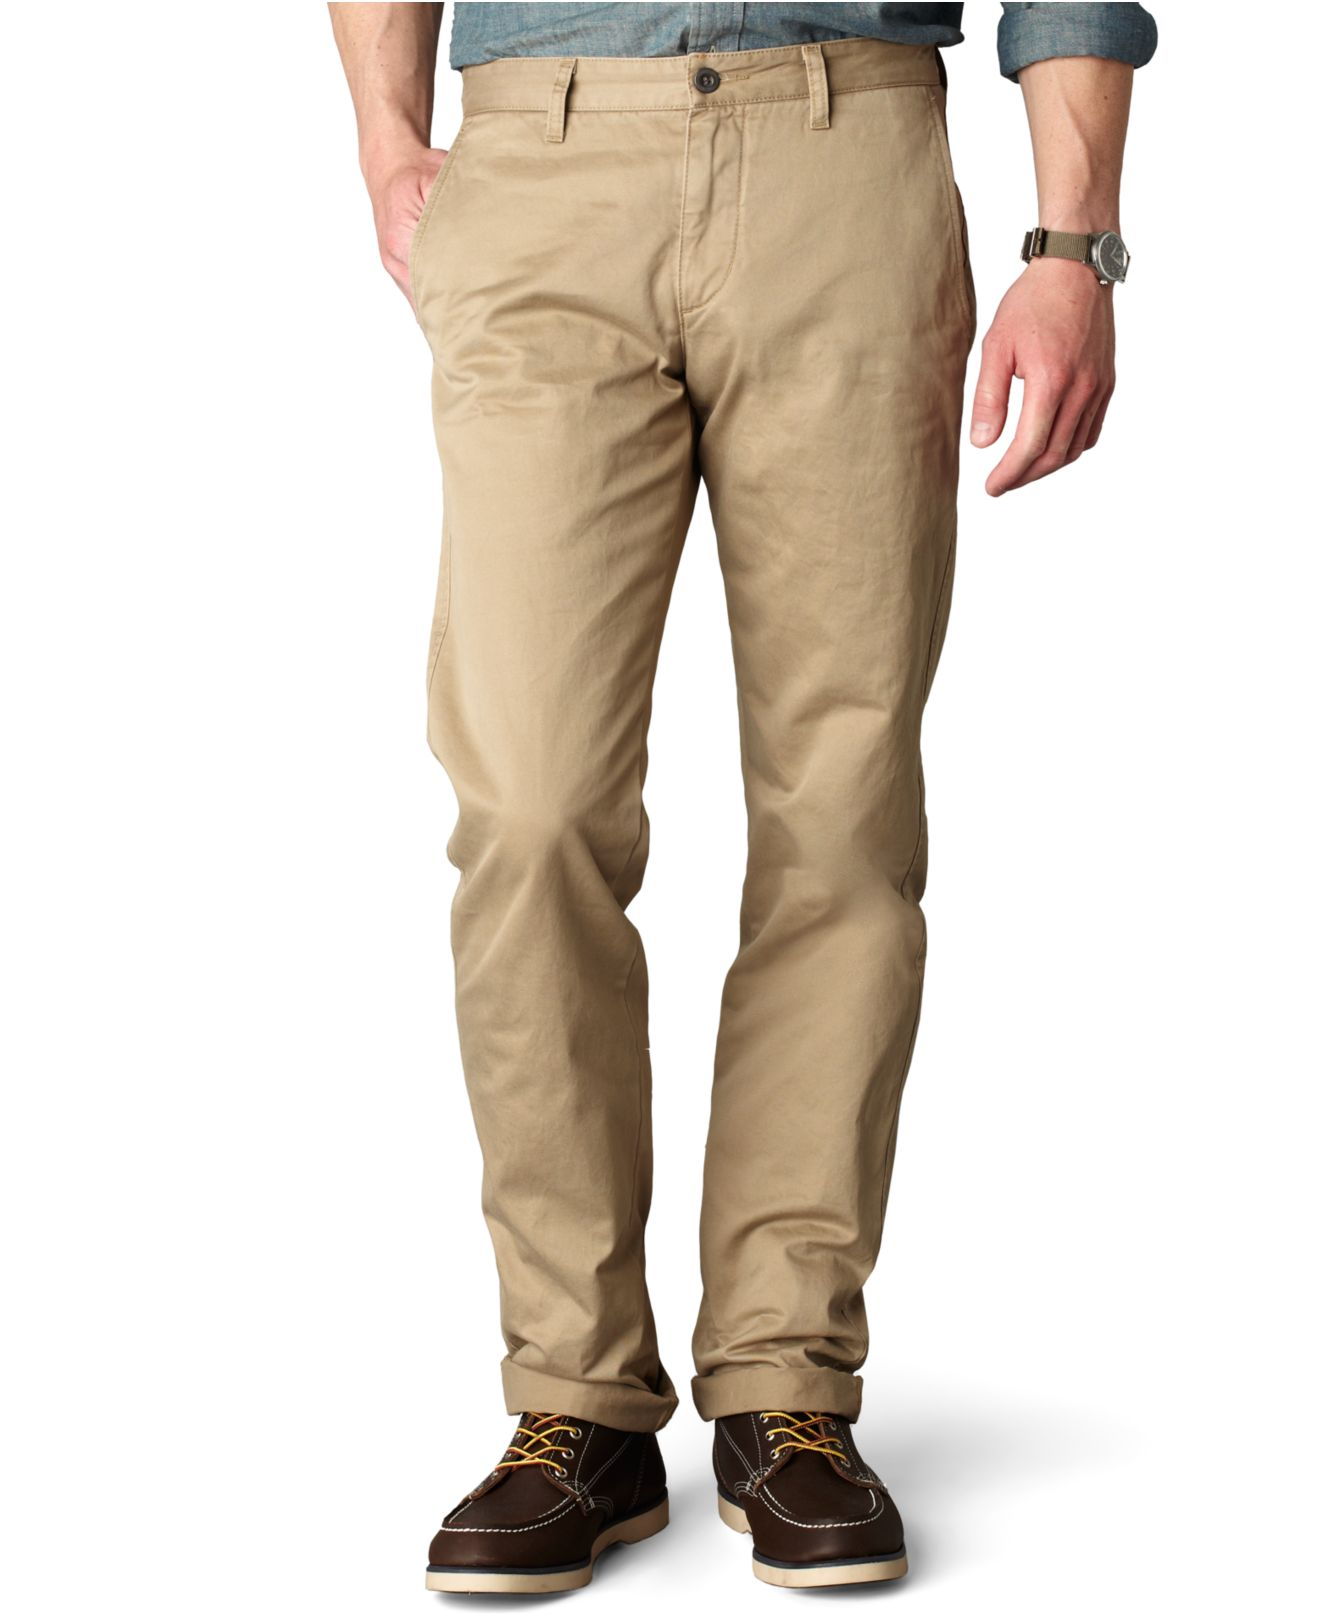 Bezighouden Aannemelijk plak Dockers Denim D1 Slim Tapered Fit Alpha Khaki Flat Front Pants in British  Khaki (Natural) for Men - Lyst